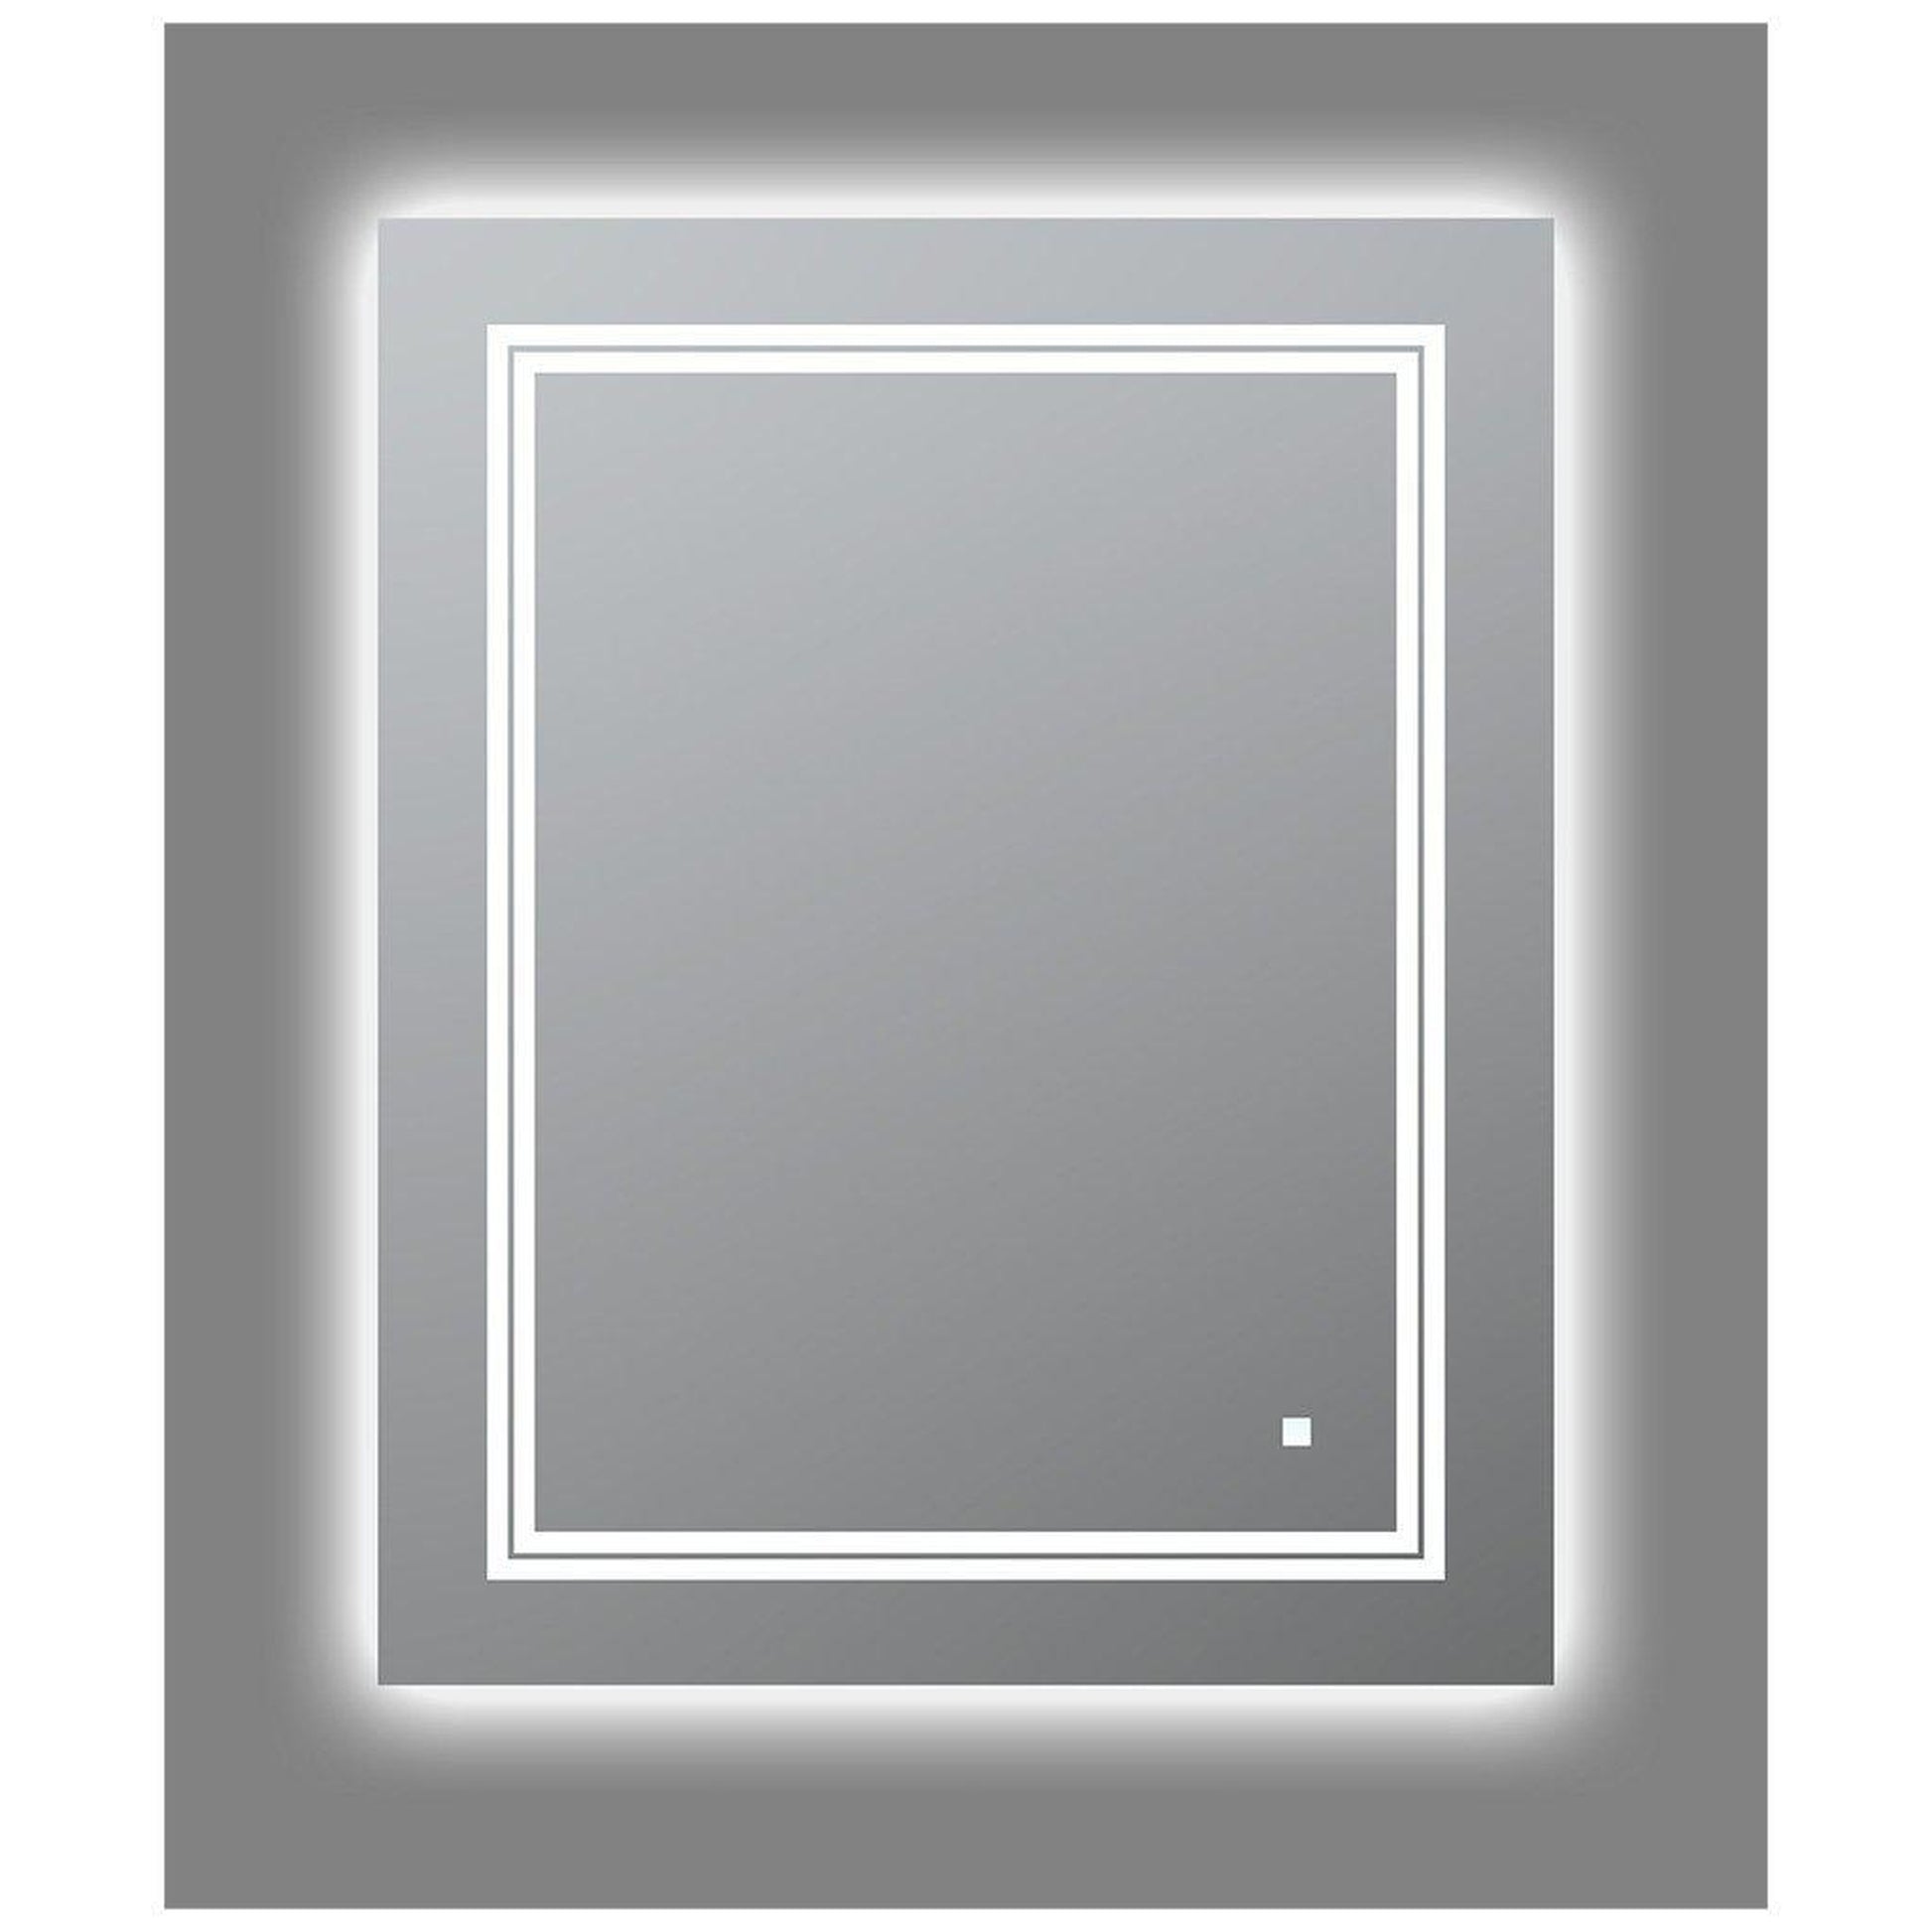 Aquadom SOHO 24" X 30" Rectangular Ultra-Slim Frame LED Lighted Bathroom Mirror With Defogger